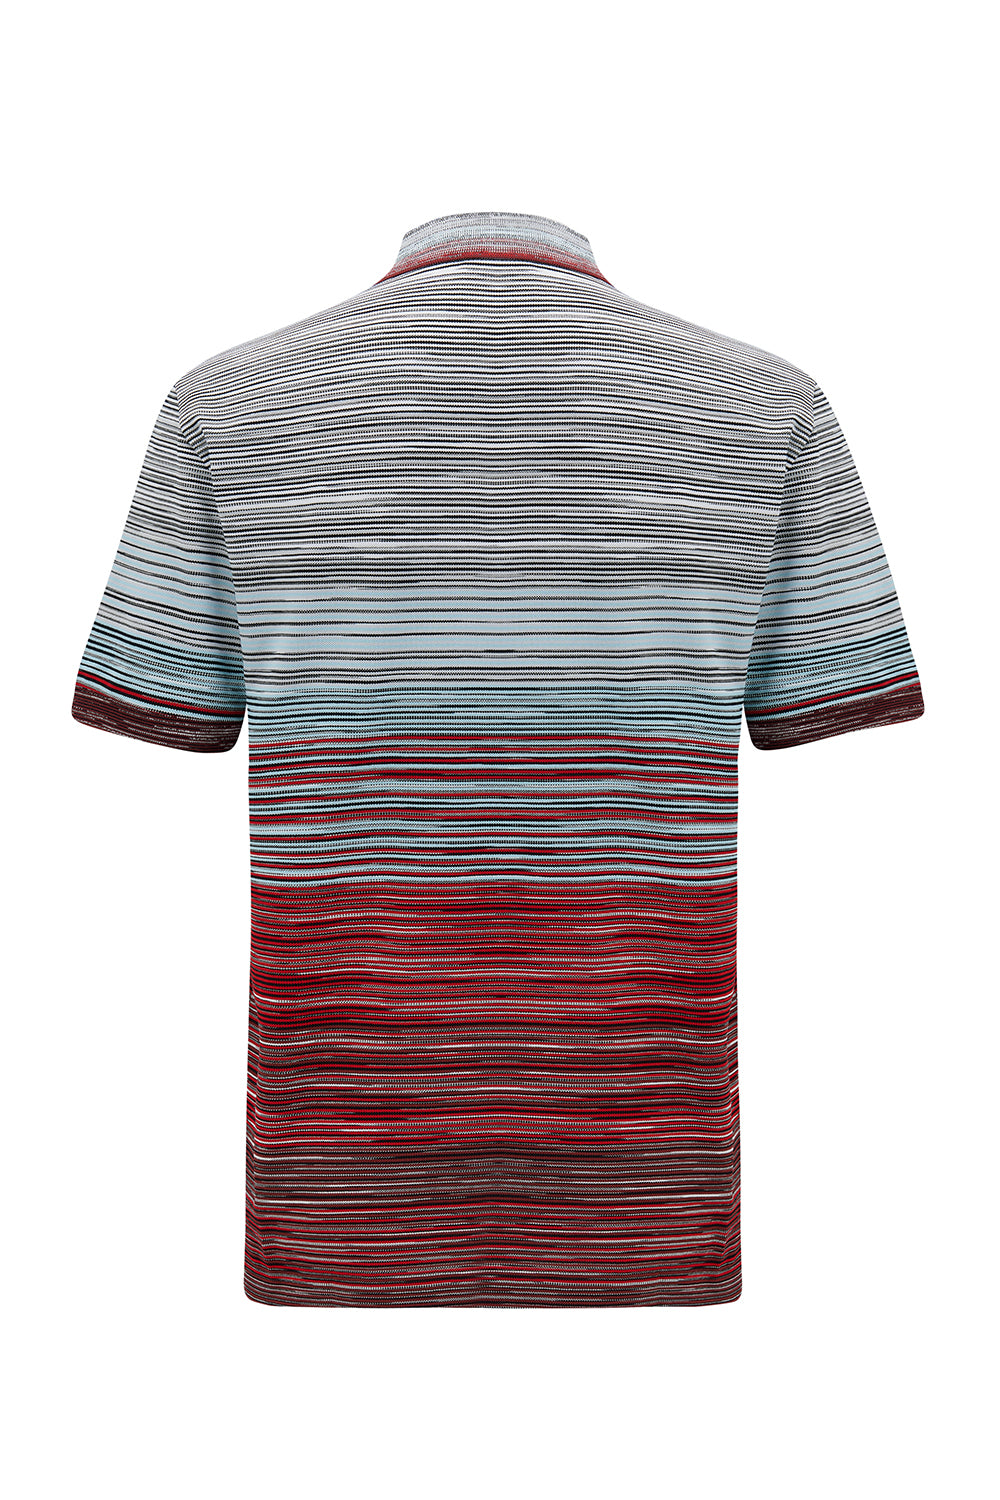 Missoni Men's Stripe Knitted Polo Shirt Sky Blue - Back View